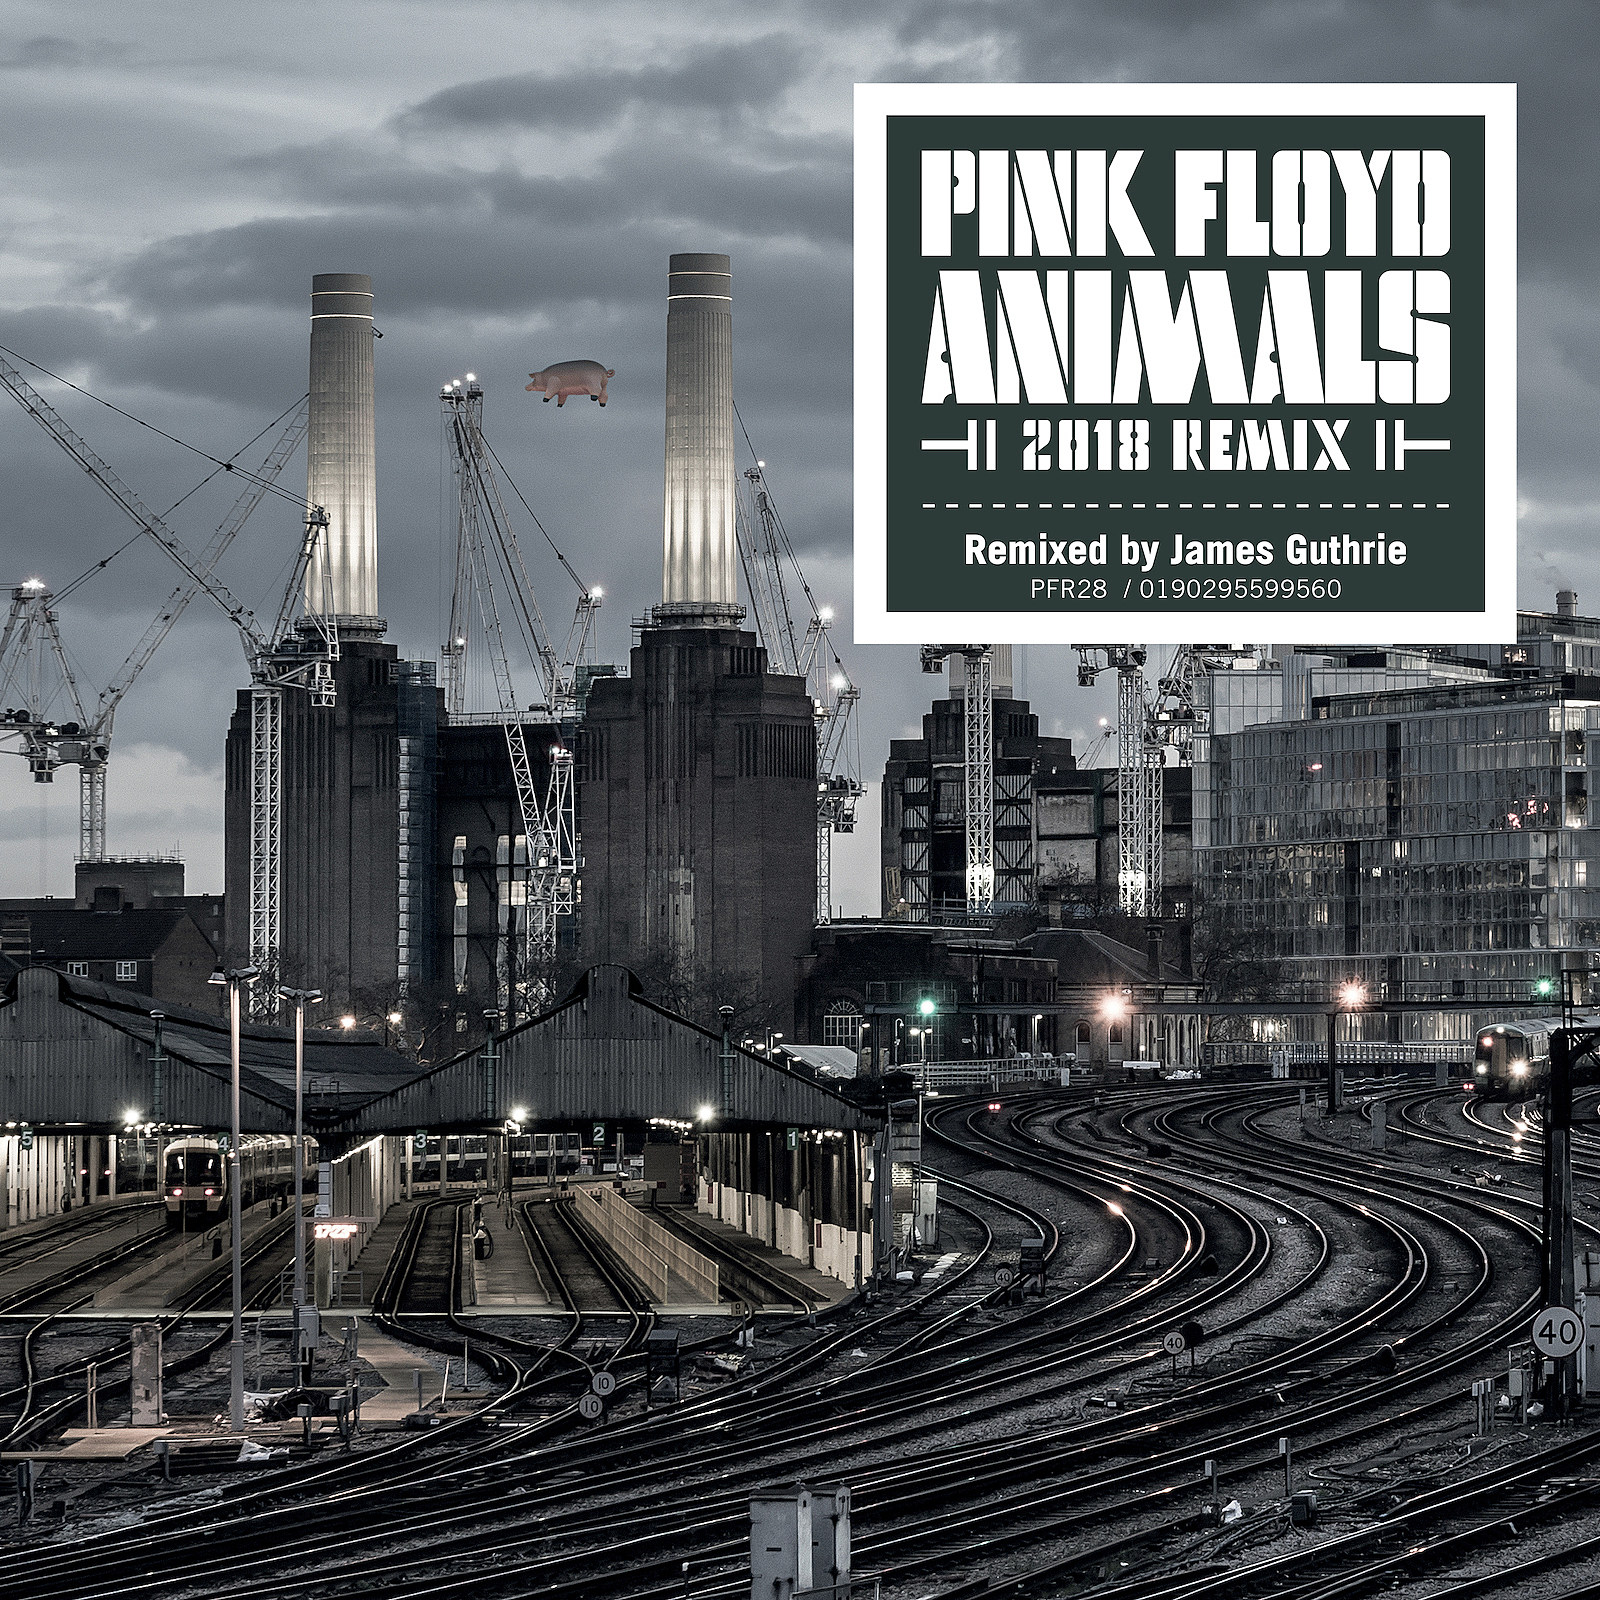 attachment-pinkfloyd_animals2018remix_onlinedigital_cover_warner.jpg